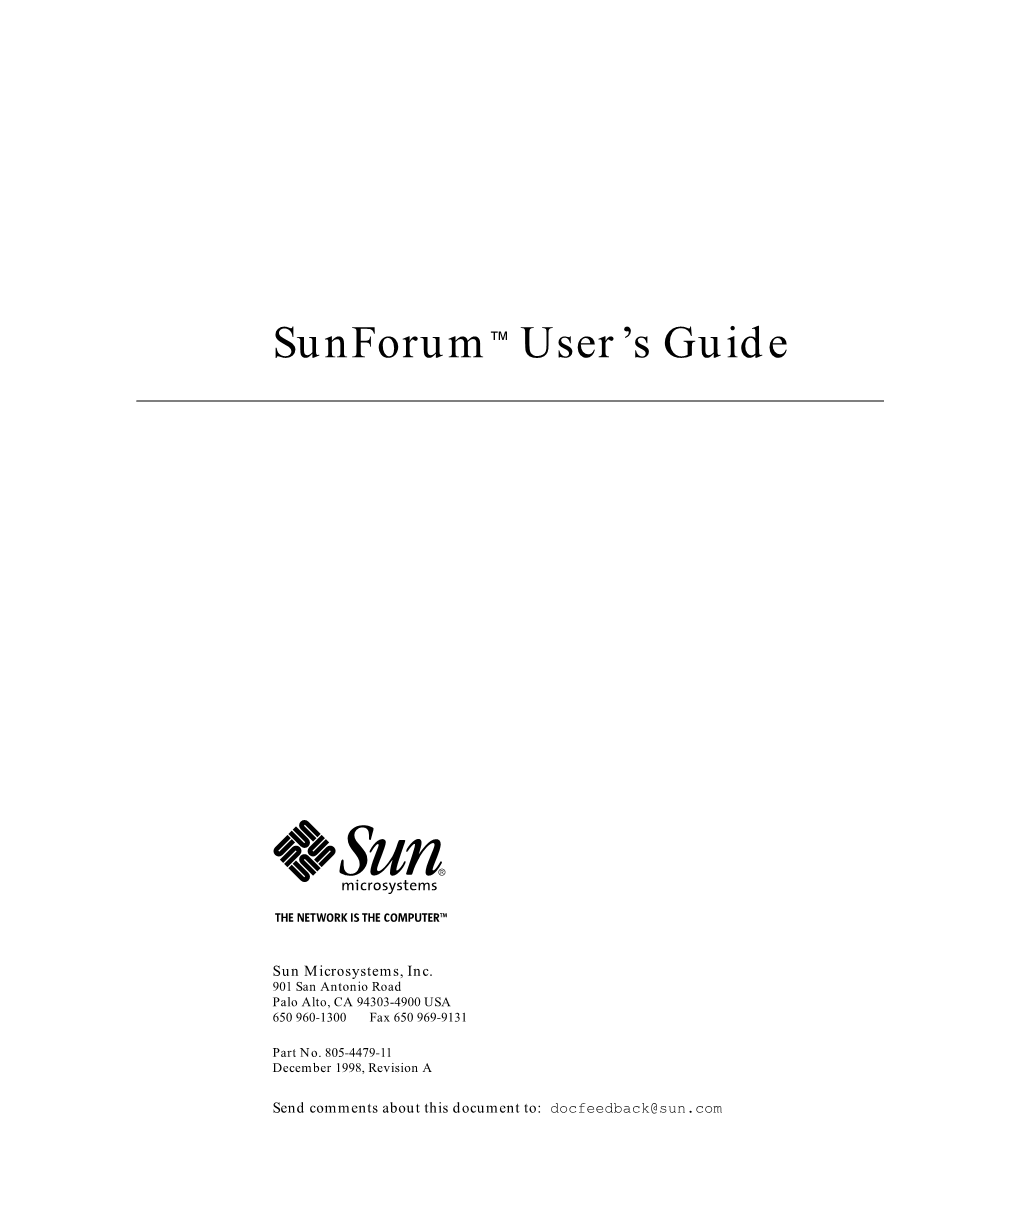 Sunforum 3.0 User's Guide